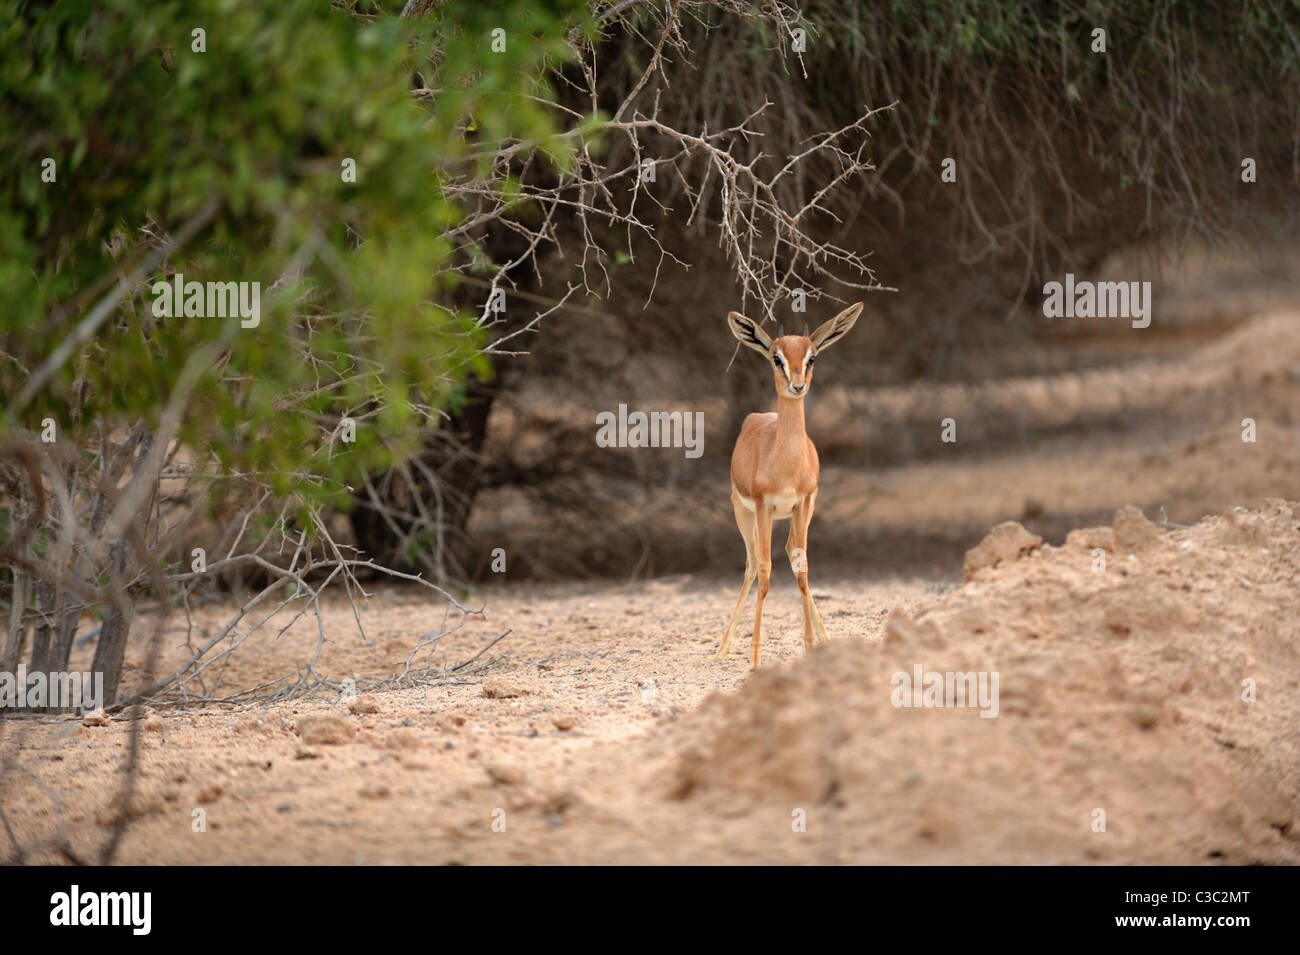 Young sand gazelle (Gazella subgutturosa marica) among scrub vegetation on Sir Bani Yas Island Stock Photo